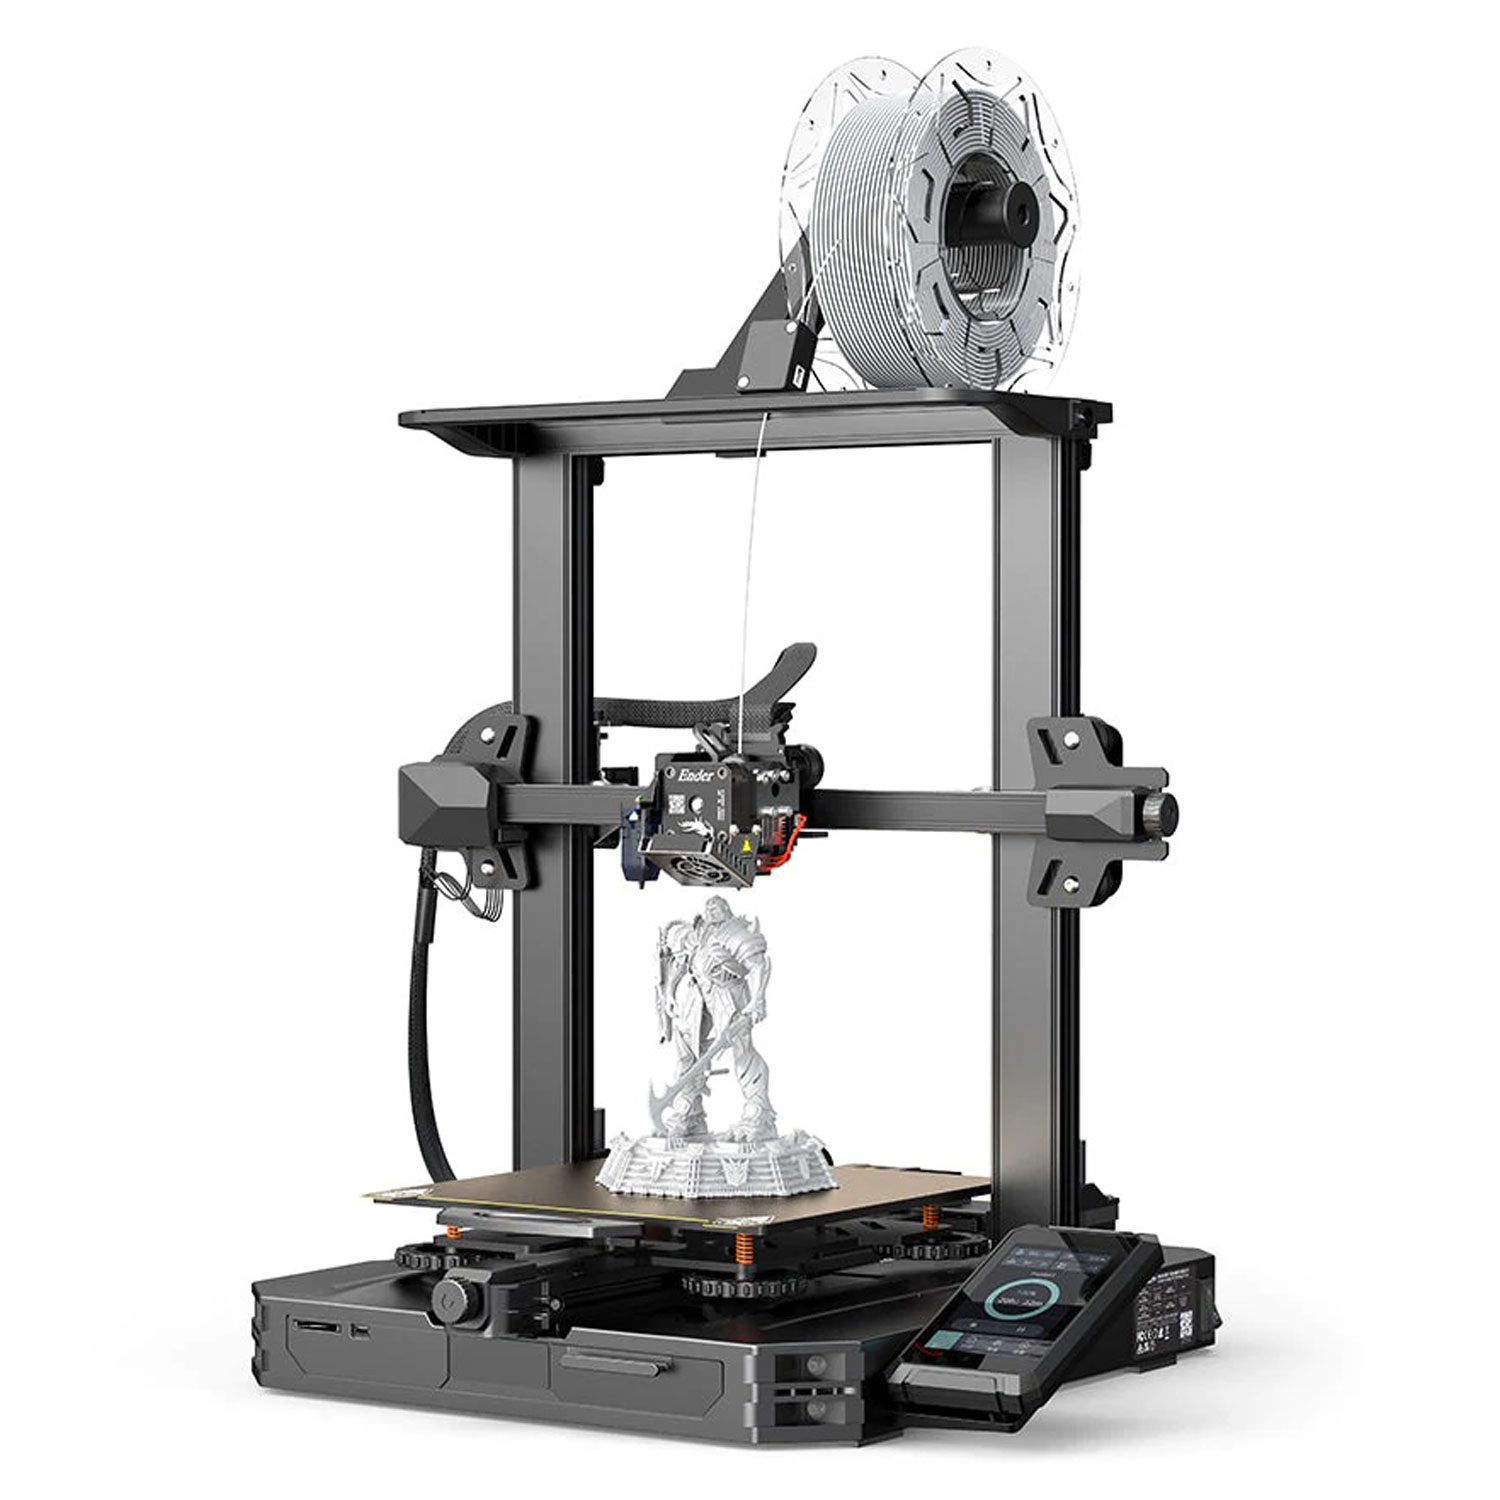 Impressora 3D Creality Ender-3 S1 Plus (300x300x300MM)